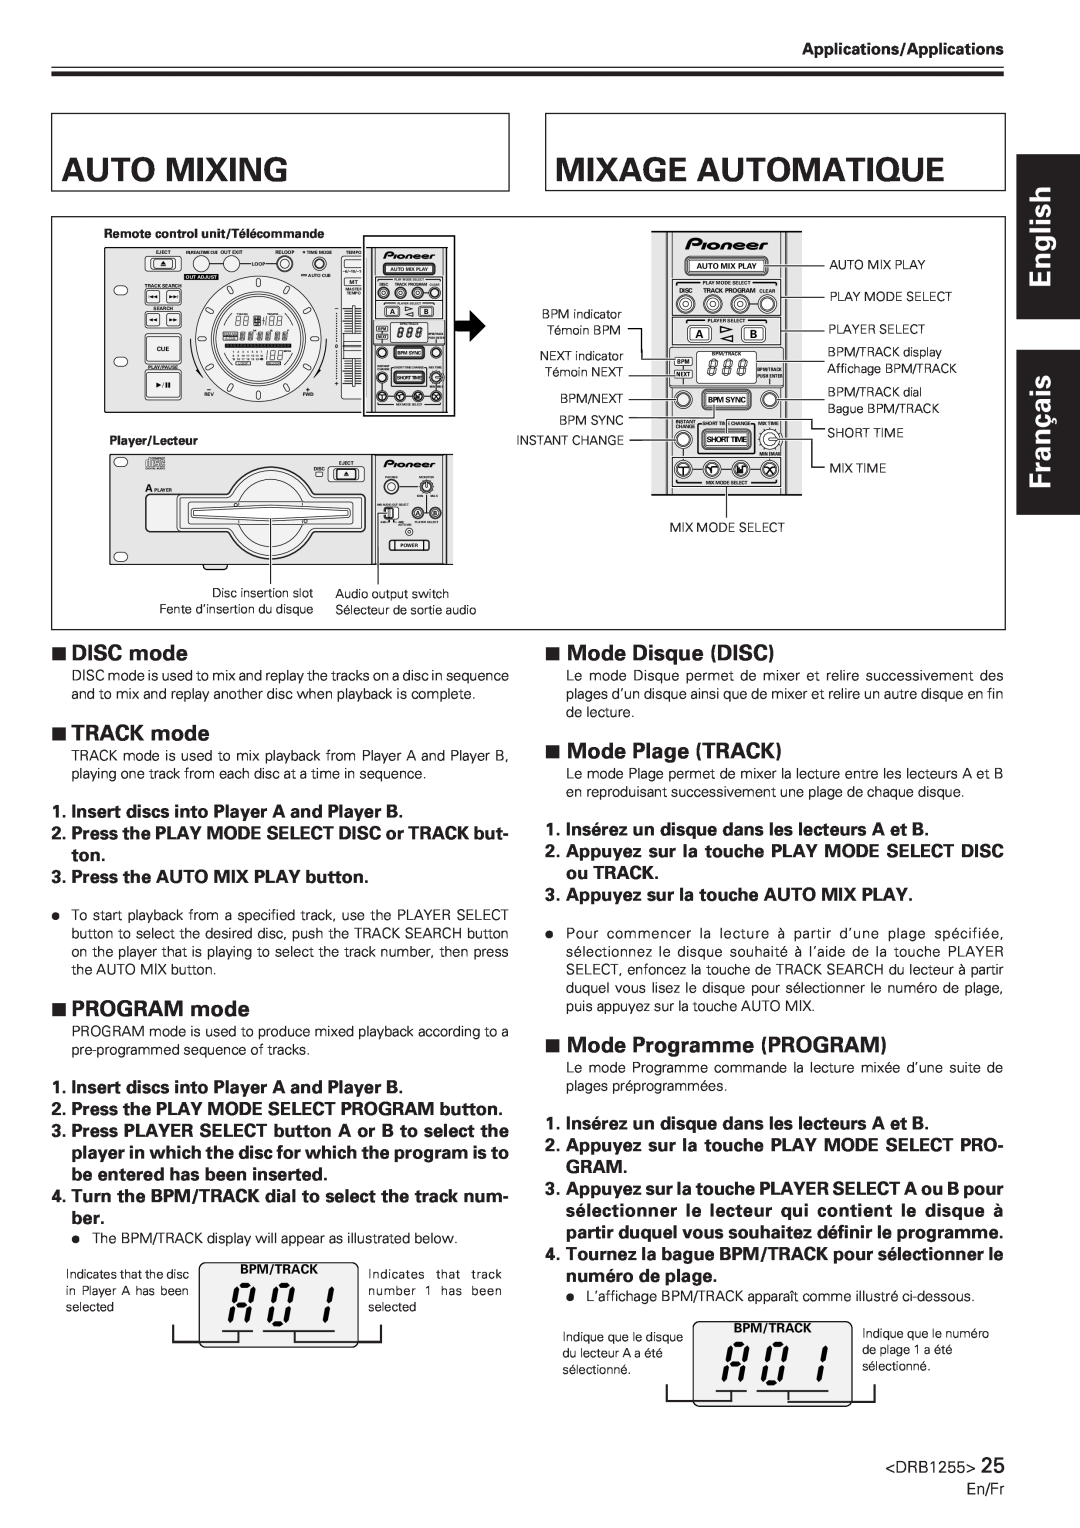 Pioneer CMX-5000 manual Auto Mixing, Mixage Automatique, 7DISC mode, Mode Disque DISC, 7TRACK mode, 7PROGRAM mode 